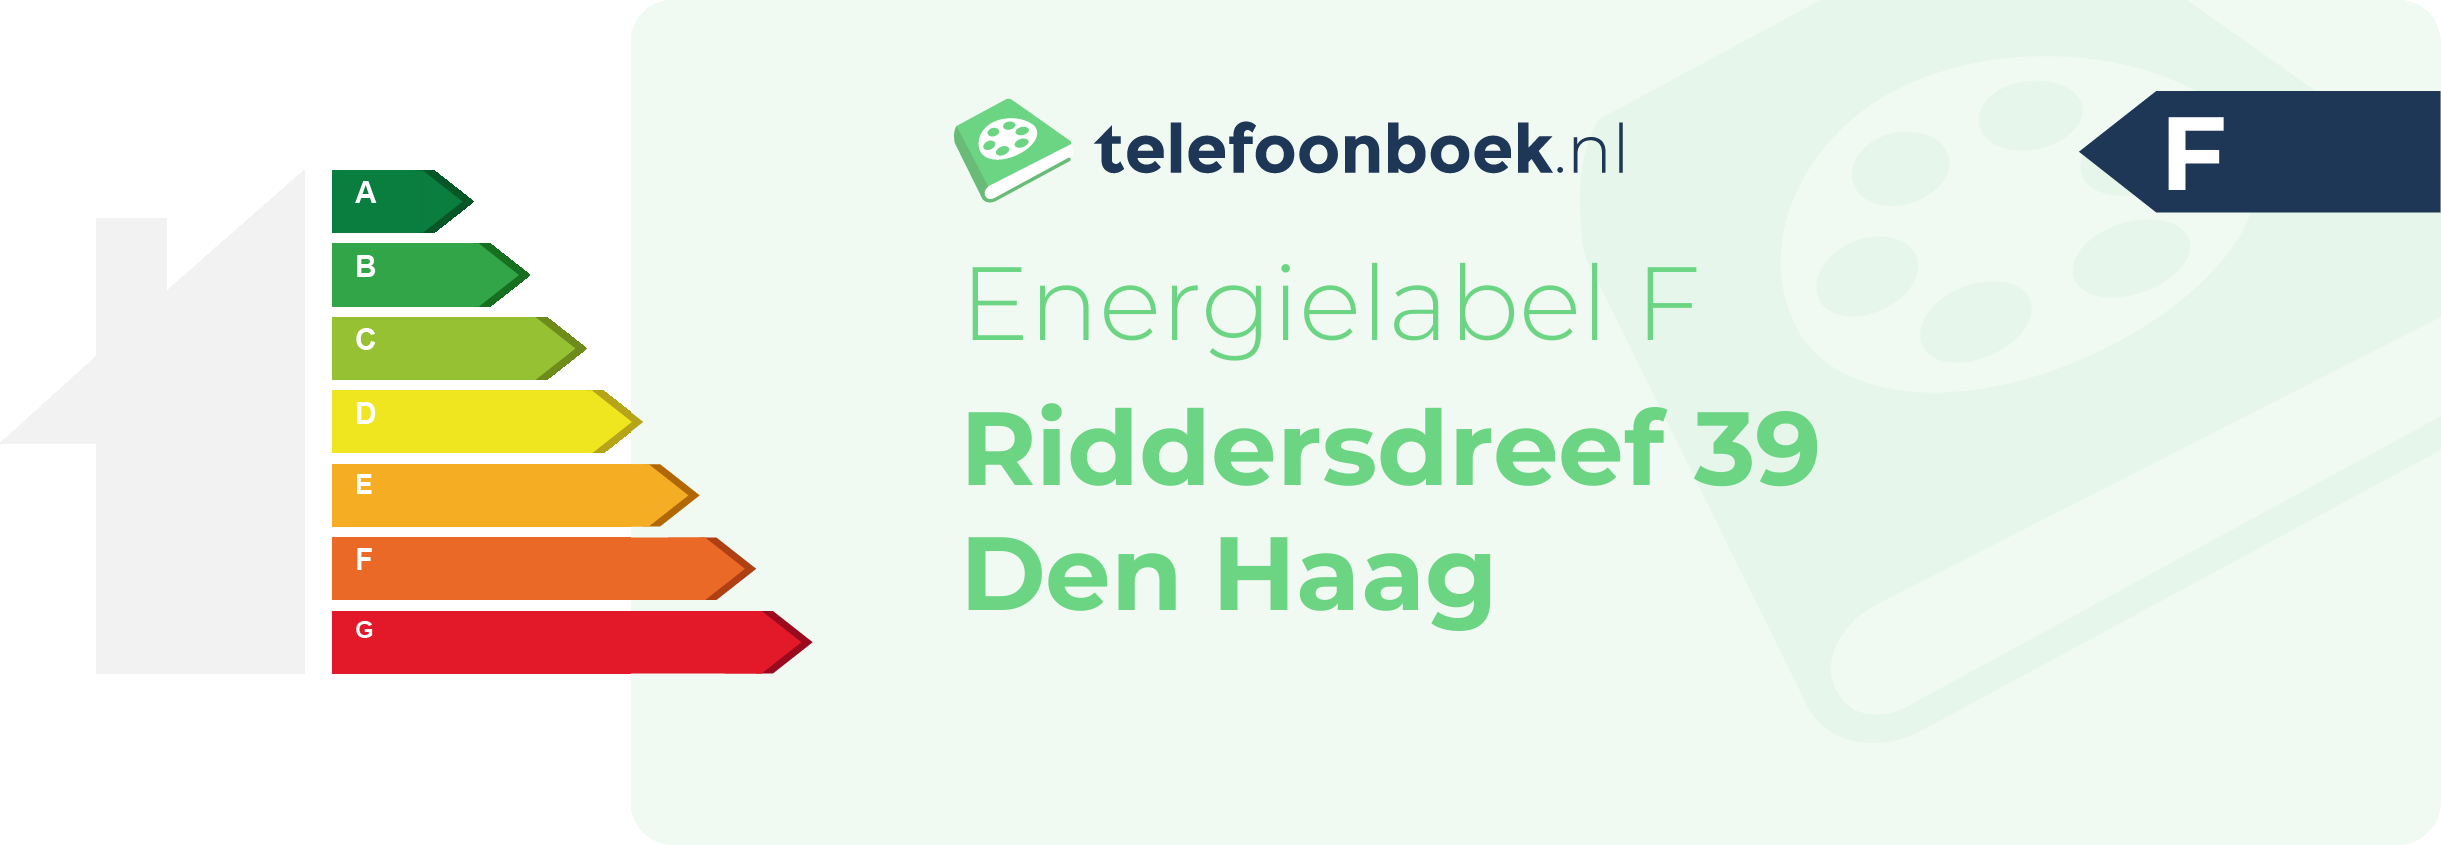 Energielabel Riddersdreef 39 Den Haag